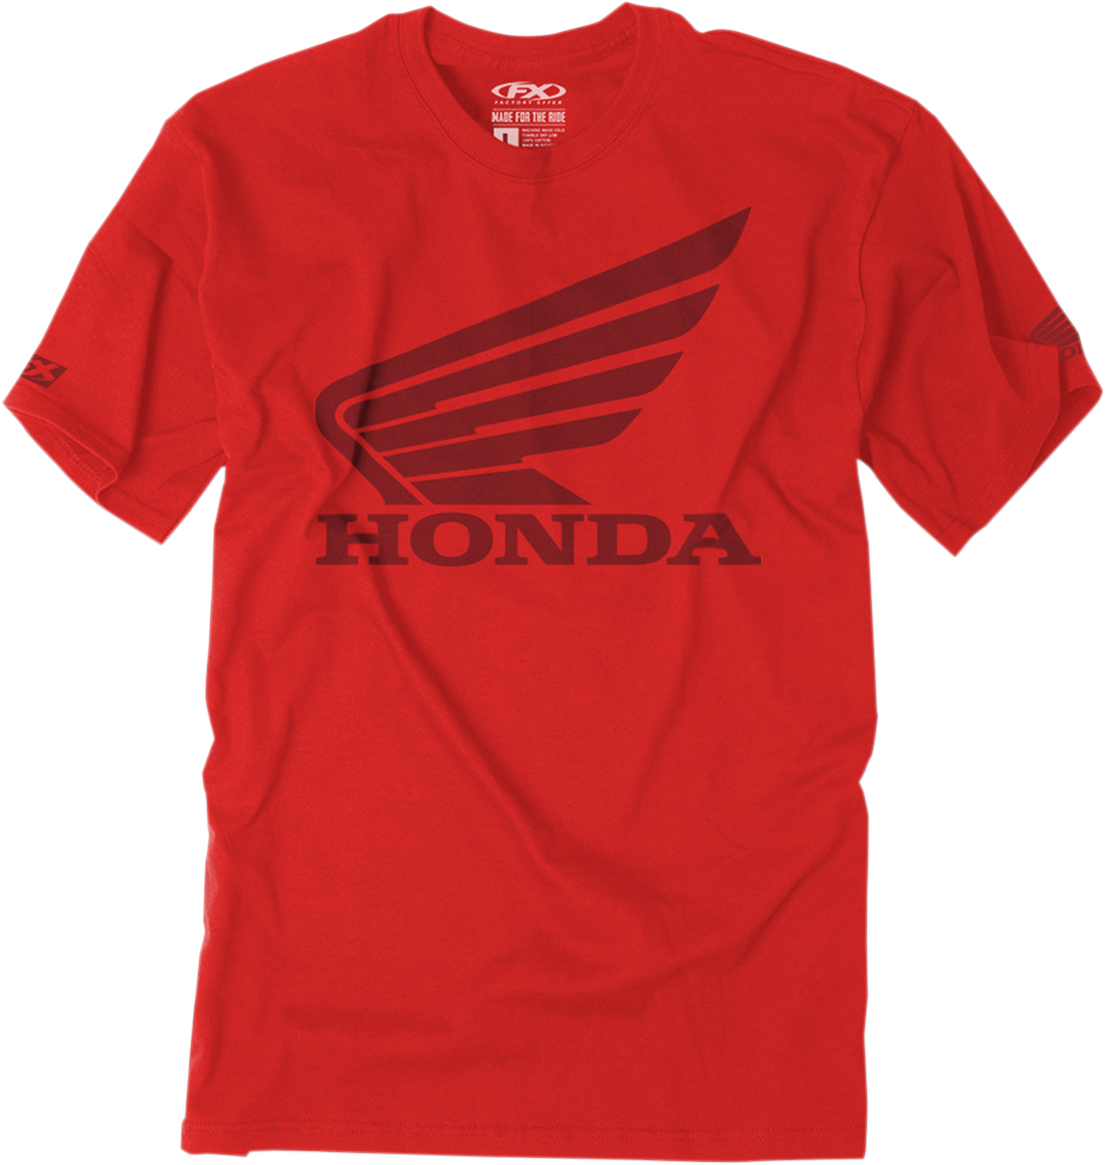 FACTORY EFFEX Honda Big Wing T-Shirt - Red - Large 21-87314